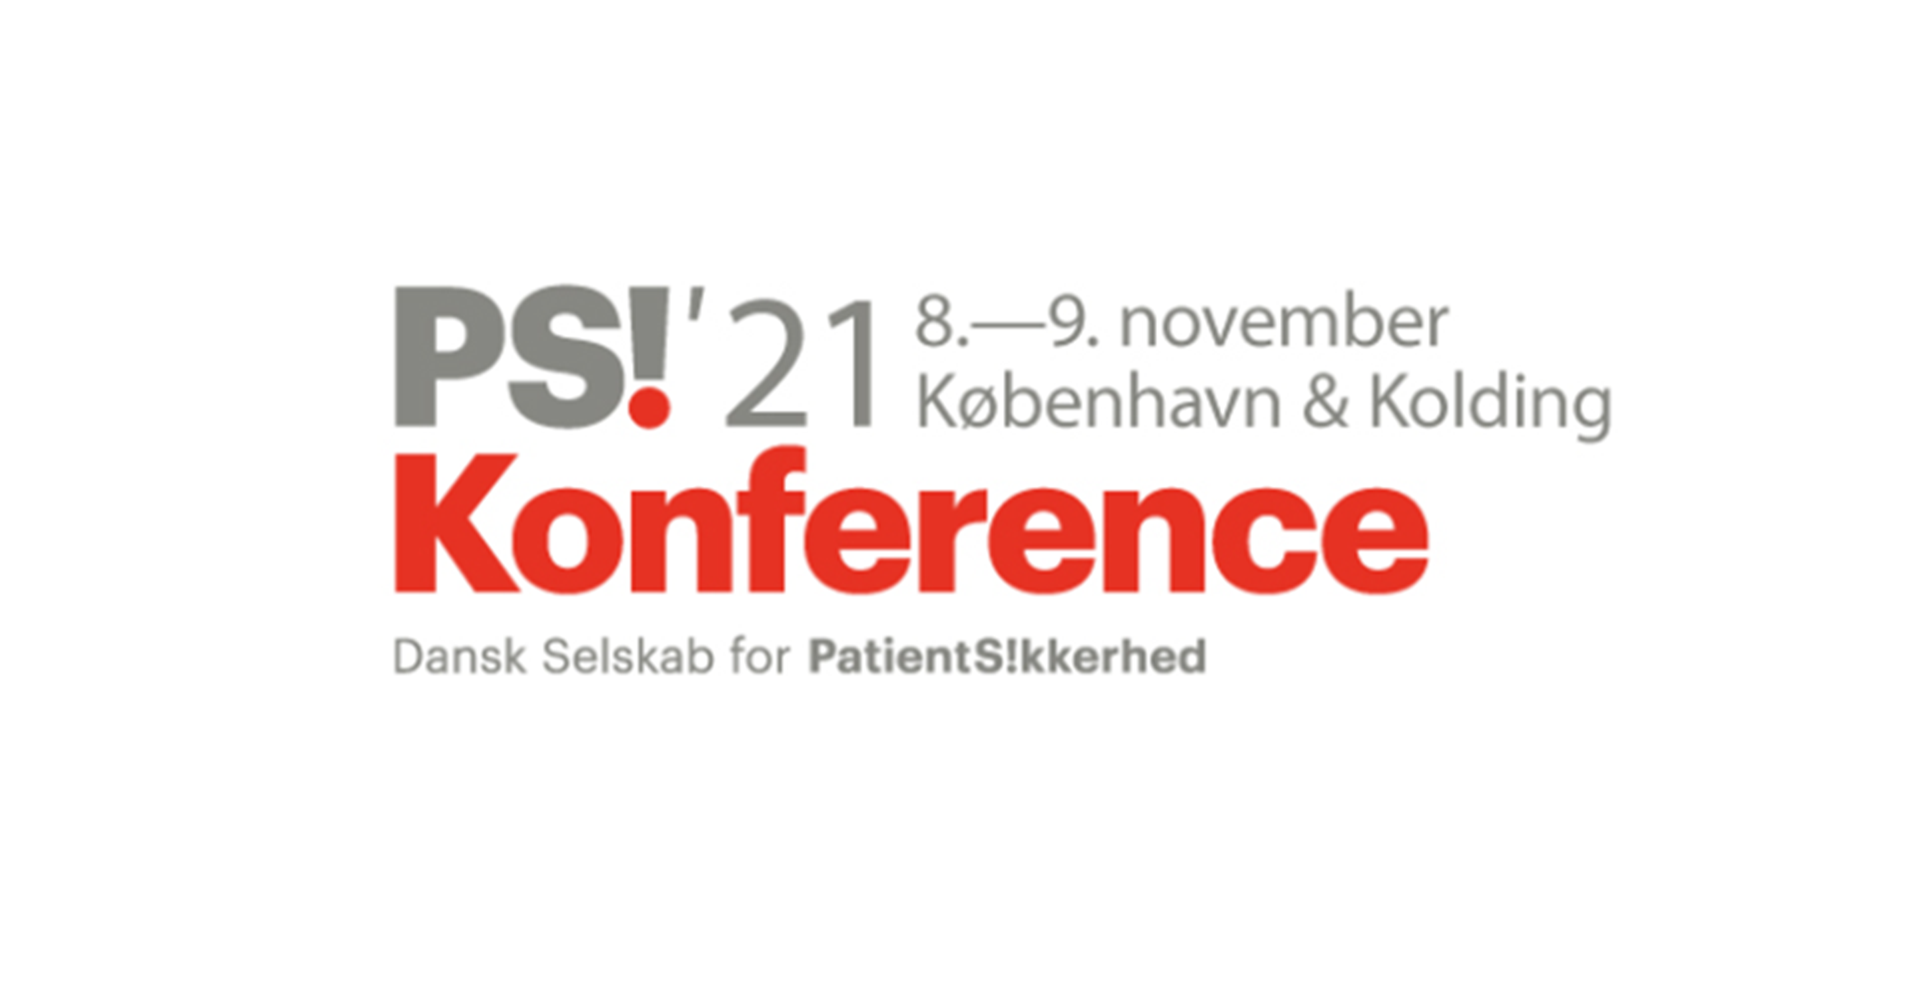 PS konference logo